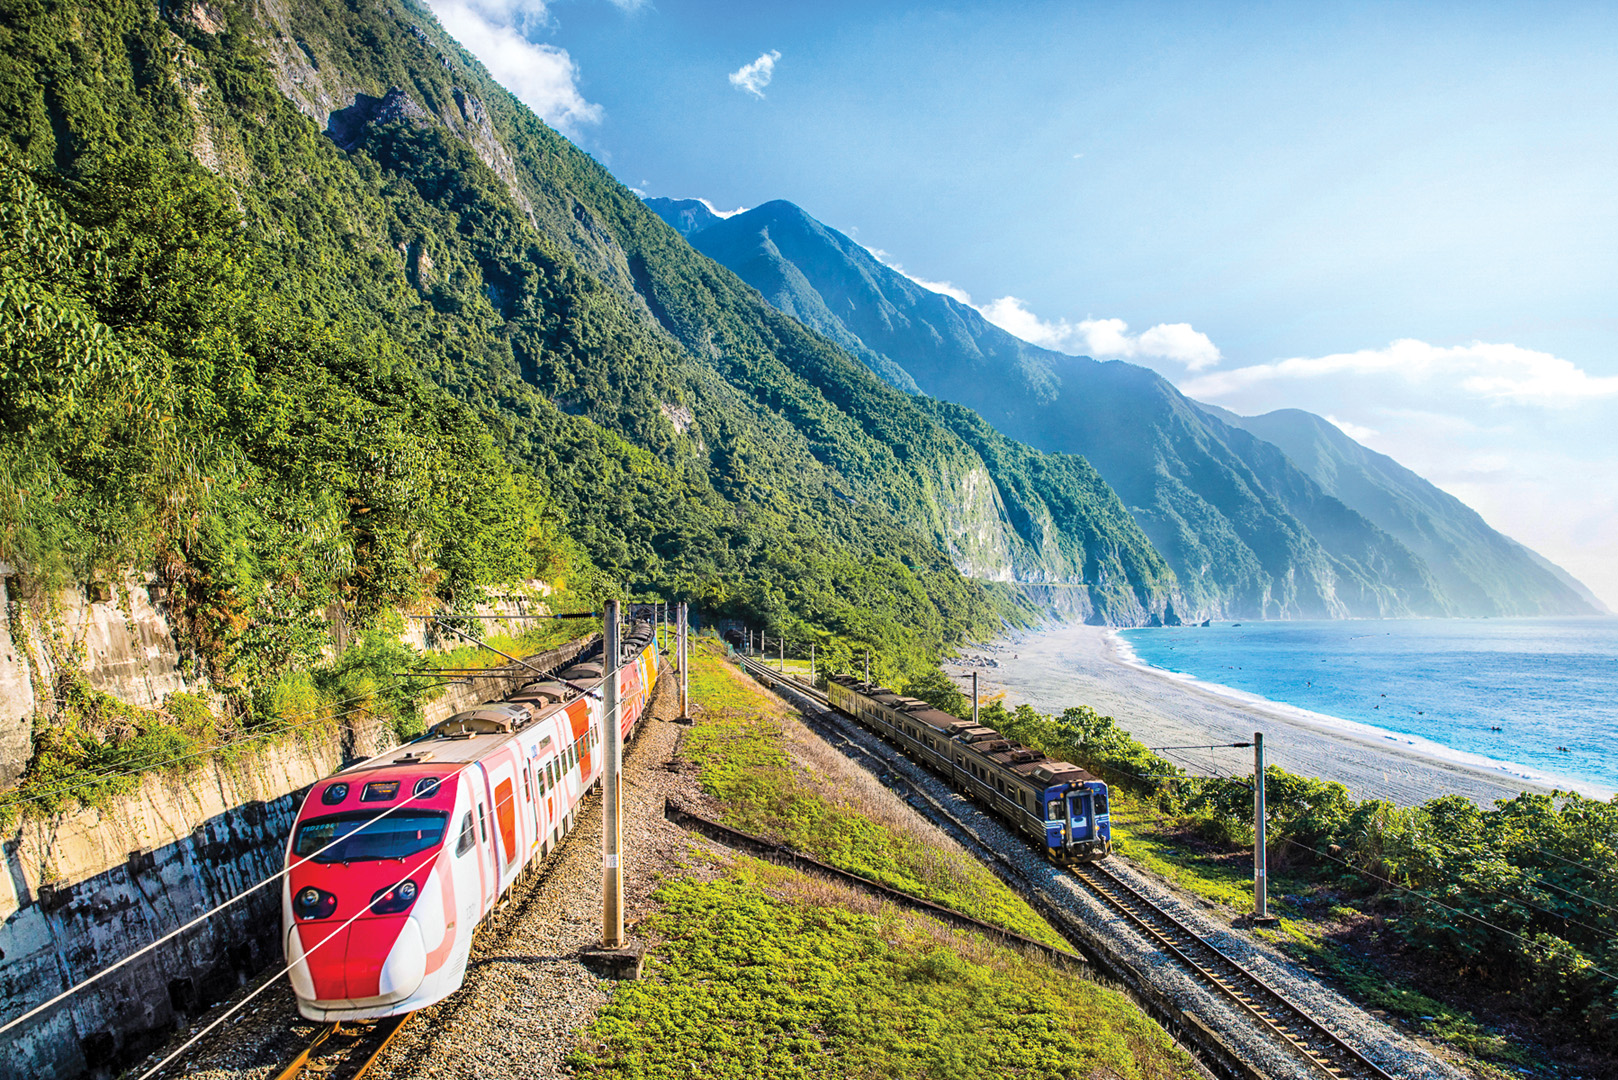 Taiwan Hualian trains